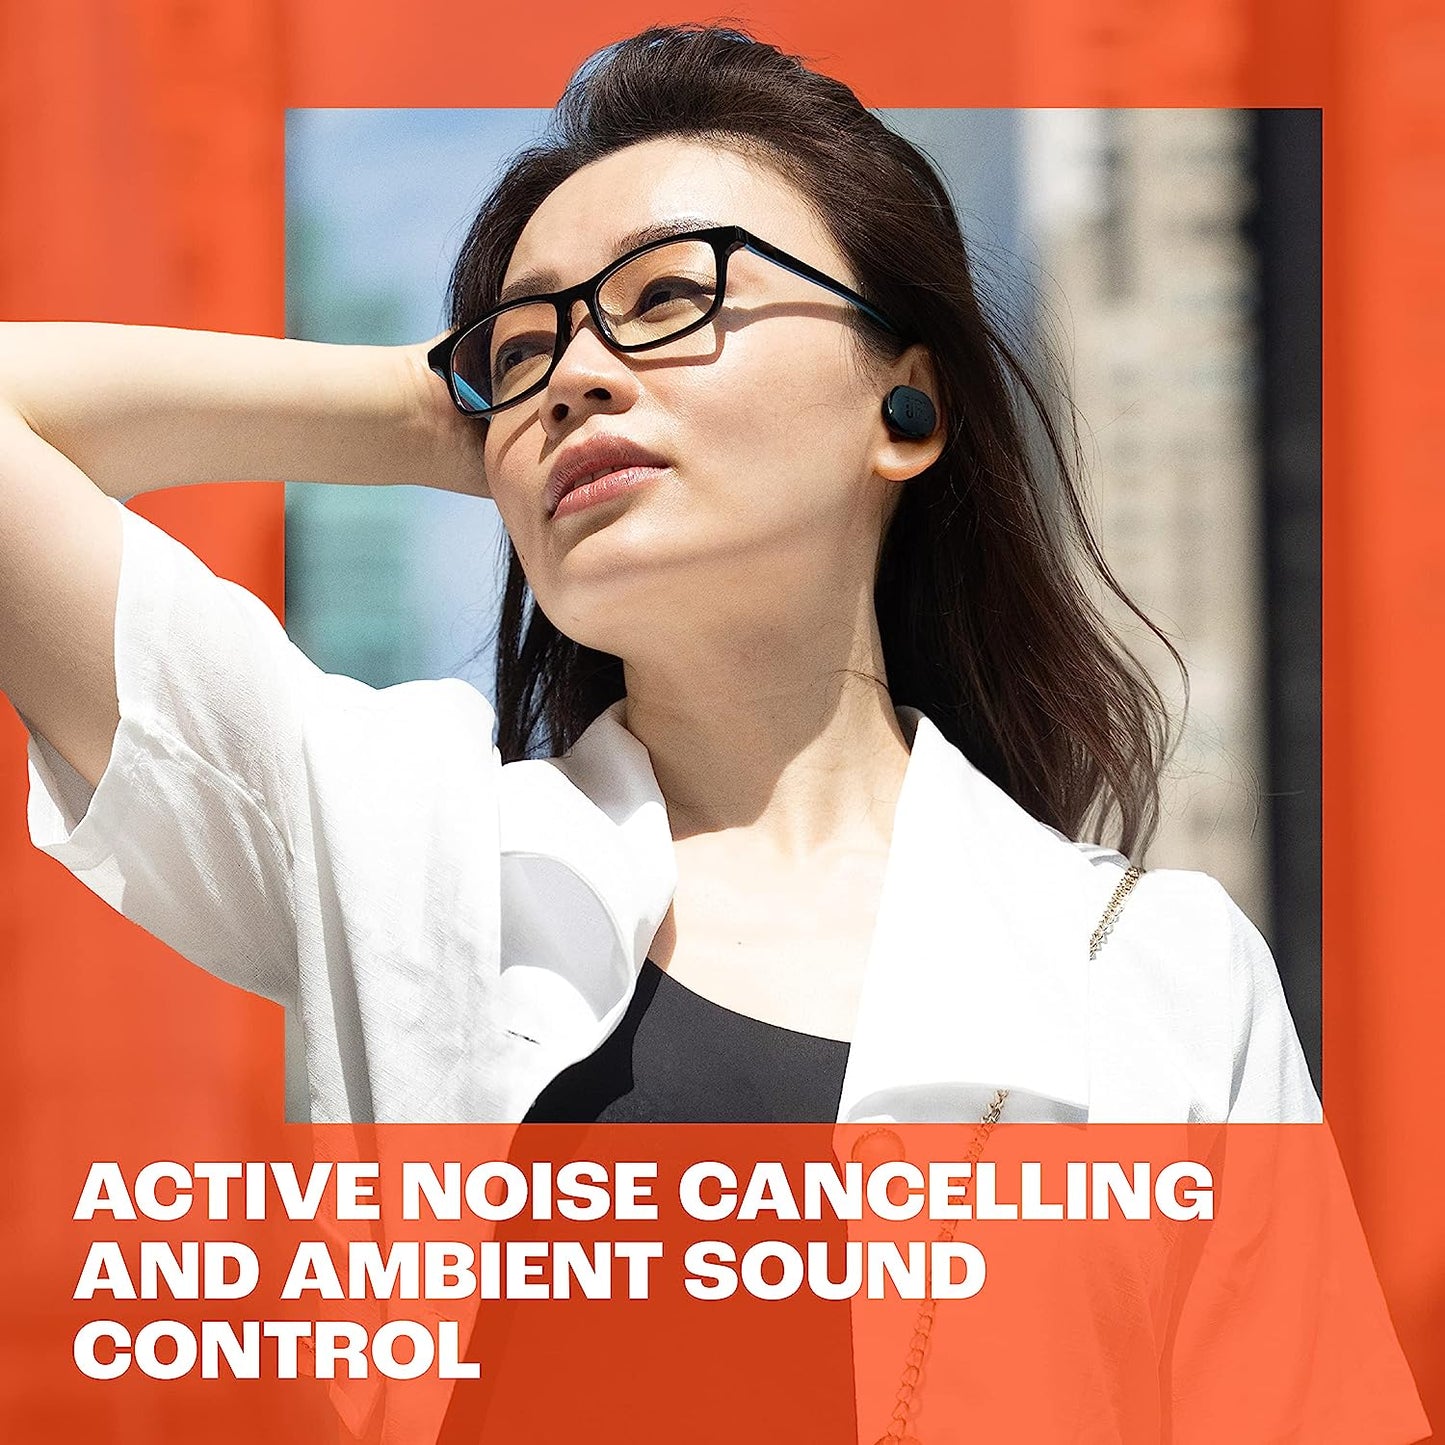 JBL Tune Buds True Wireless Noise Cancelling Earbuds - Blue